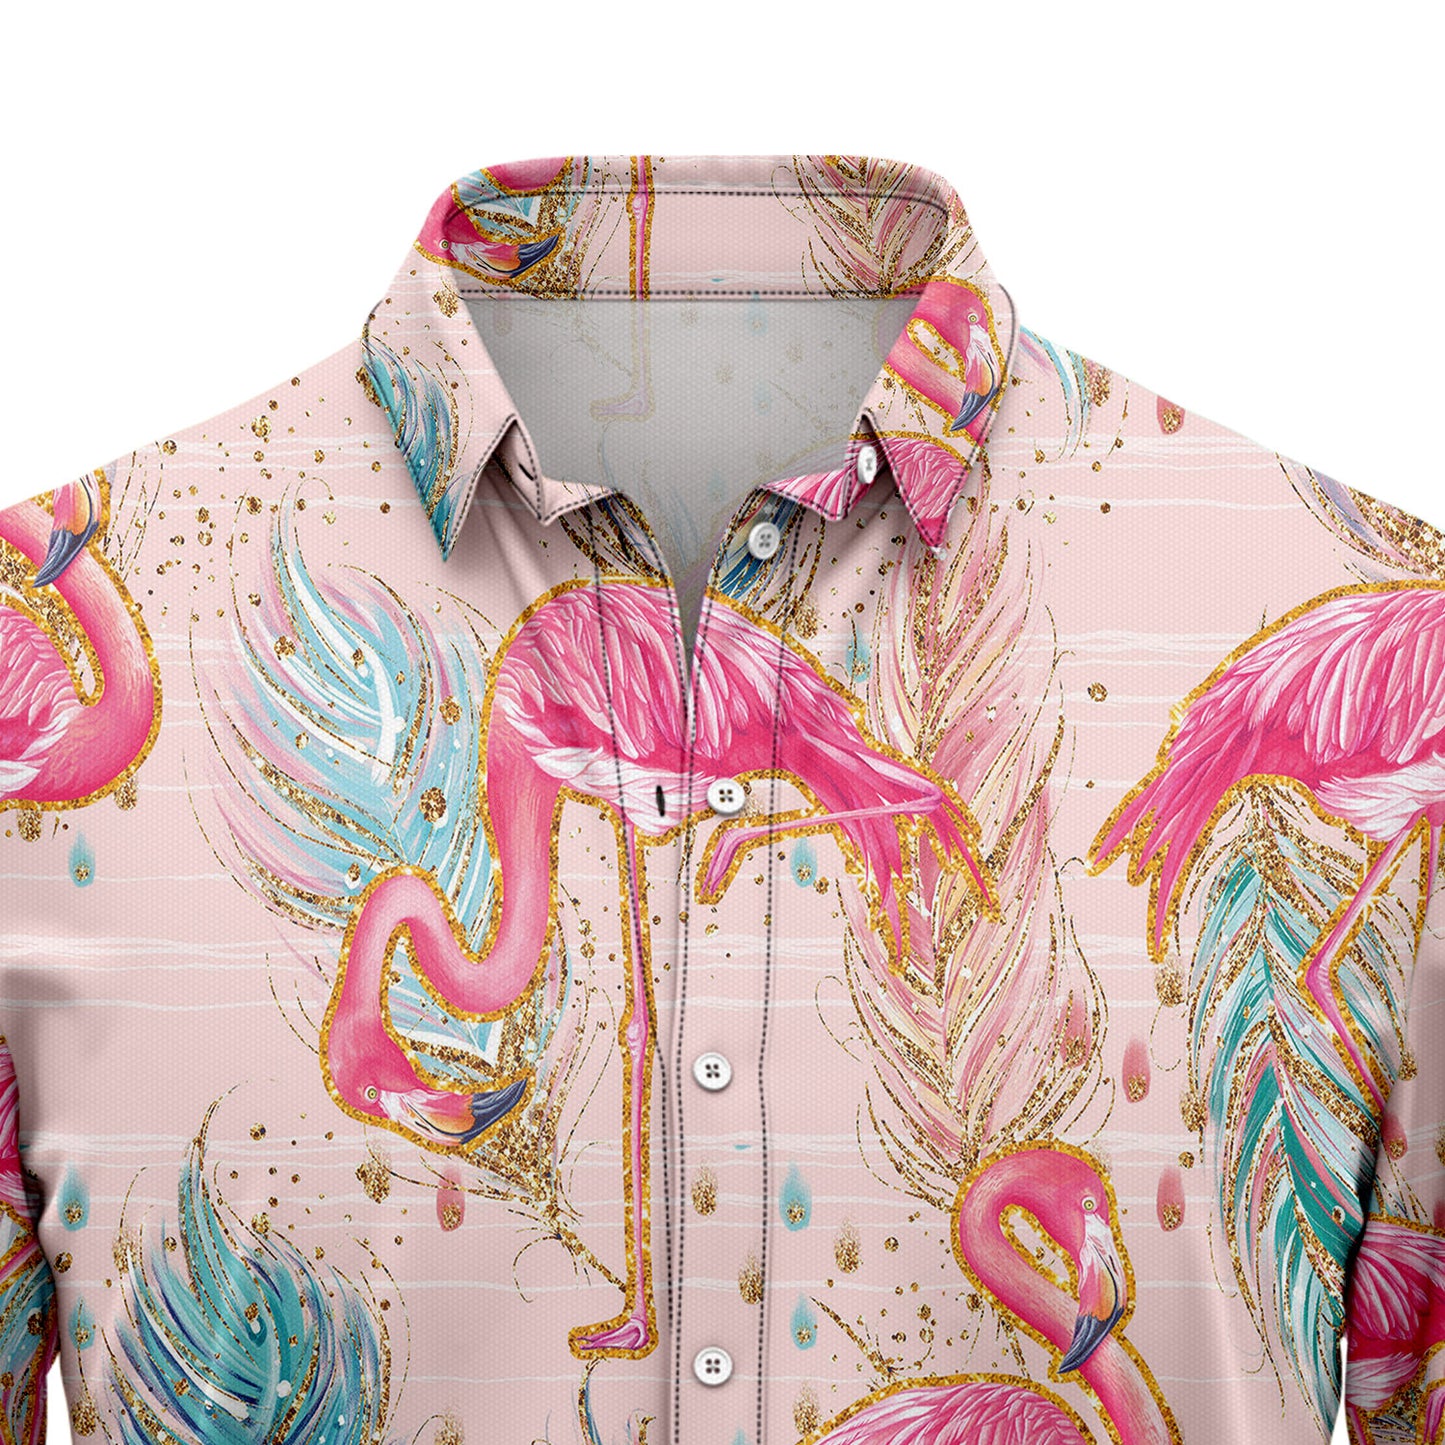 Flamingo Boho Feather H5803 Hawaiian Shirt